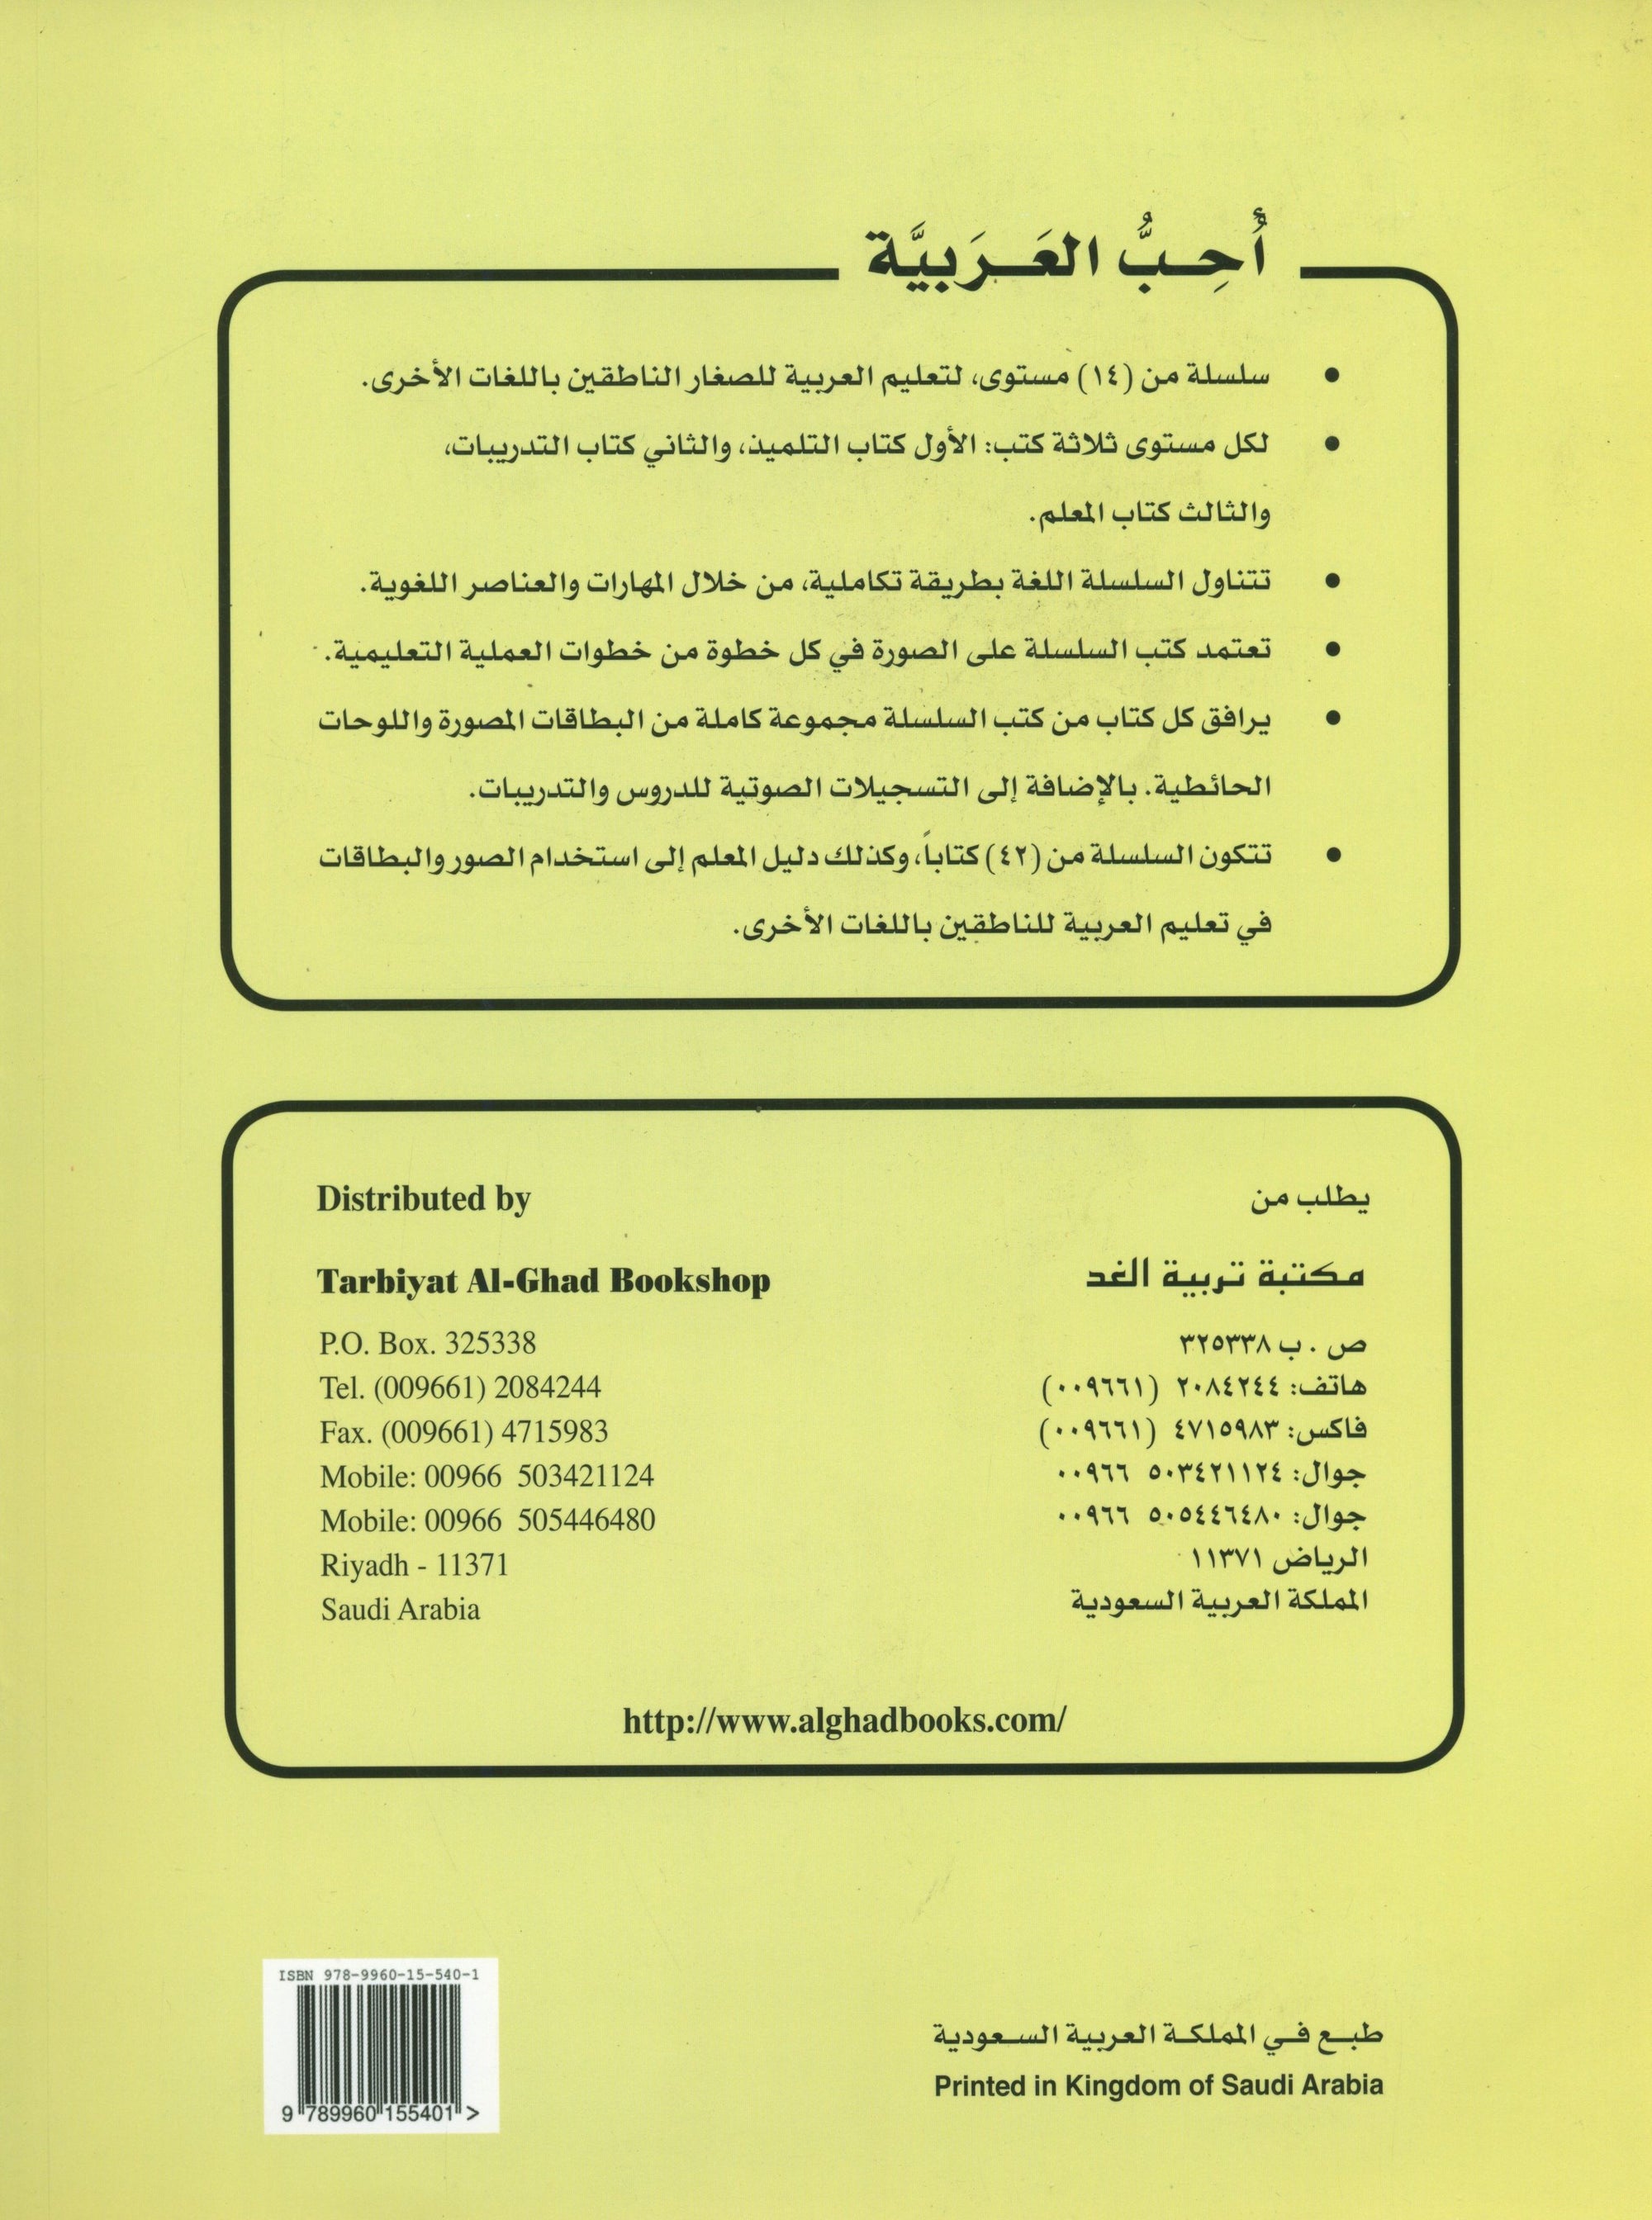 I Love Arabic Workbook Level 11 أحب العربية كتاب التدريبات